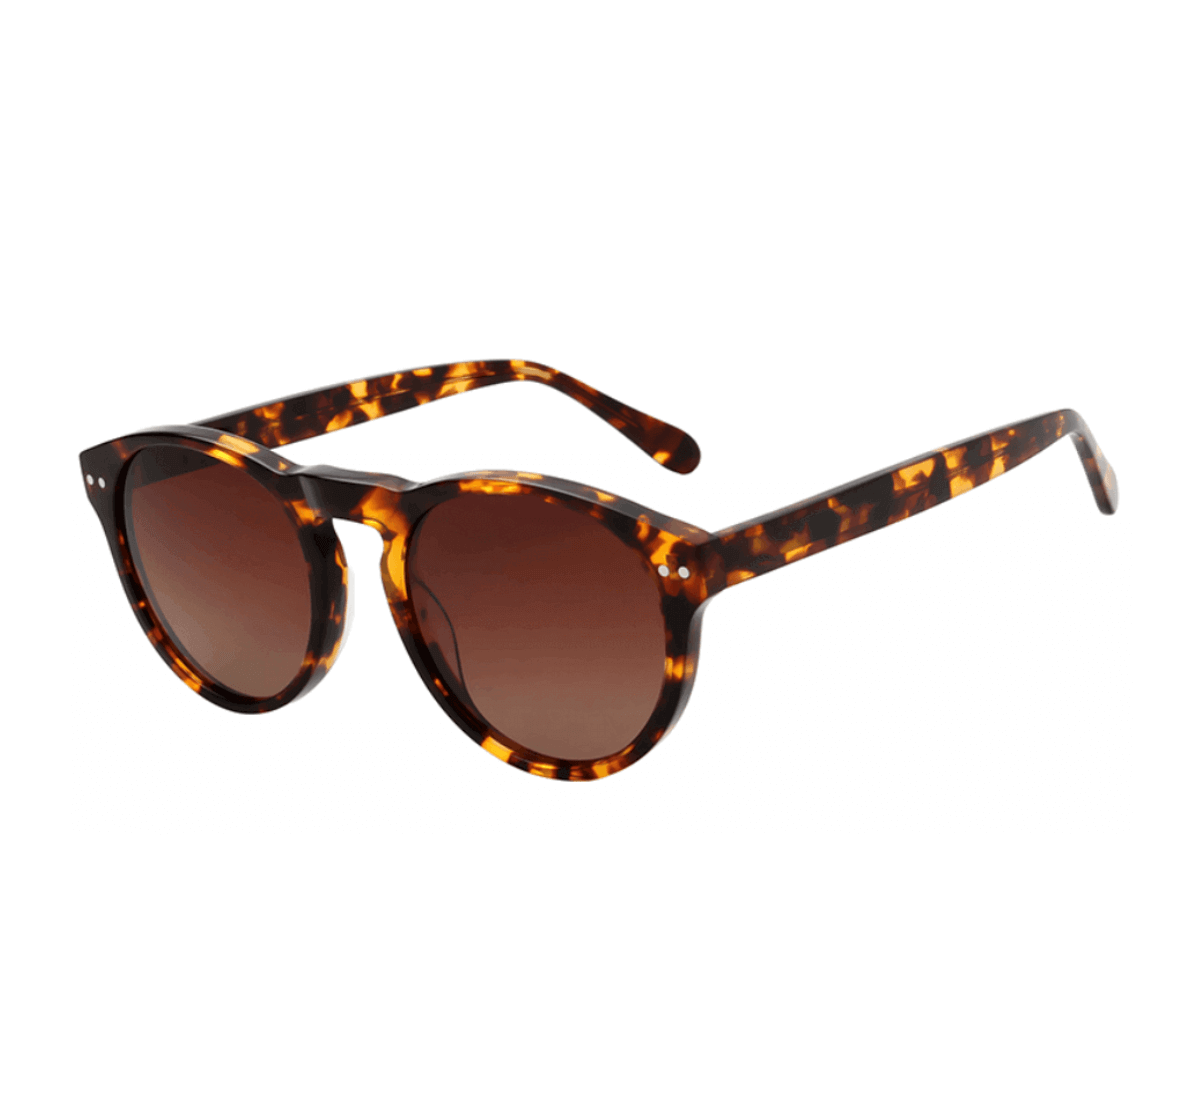 mens sunglasses wholesale, wholesale acetate sunglasses, sunglasses factory